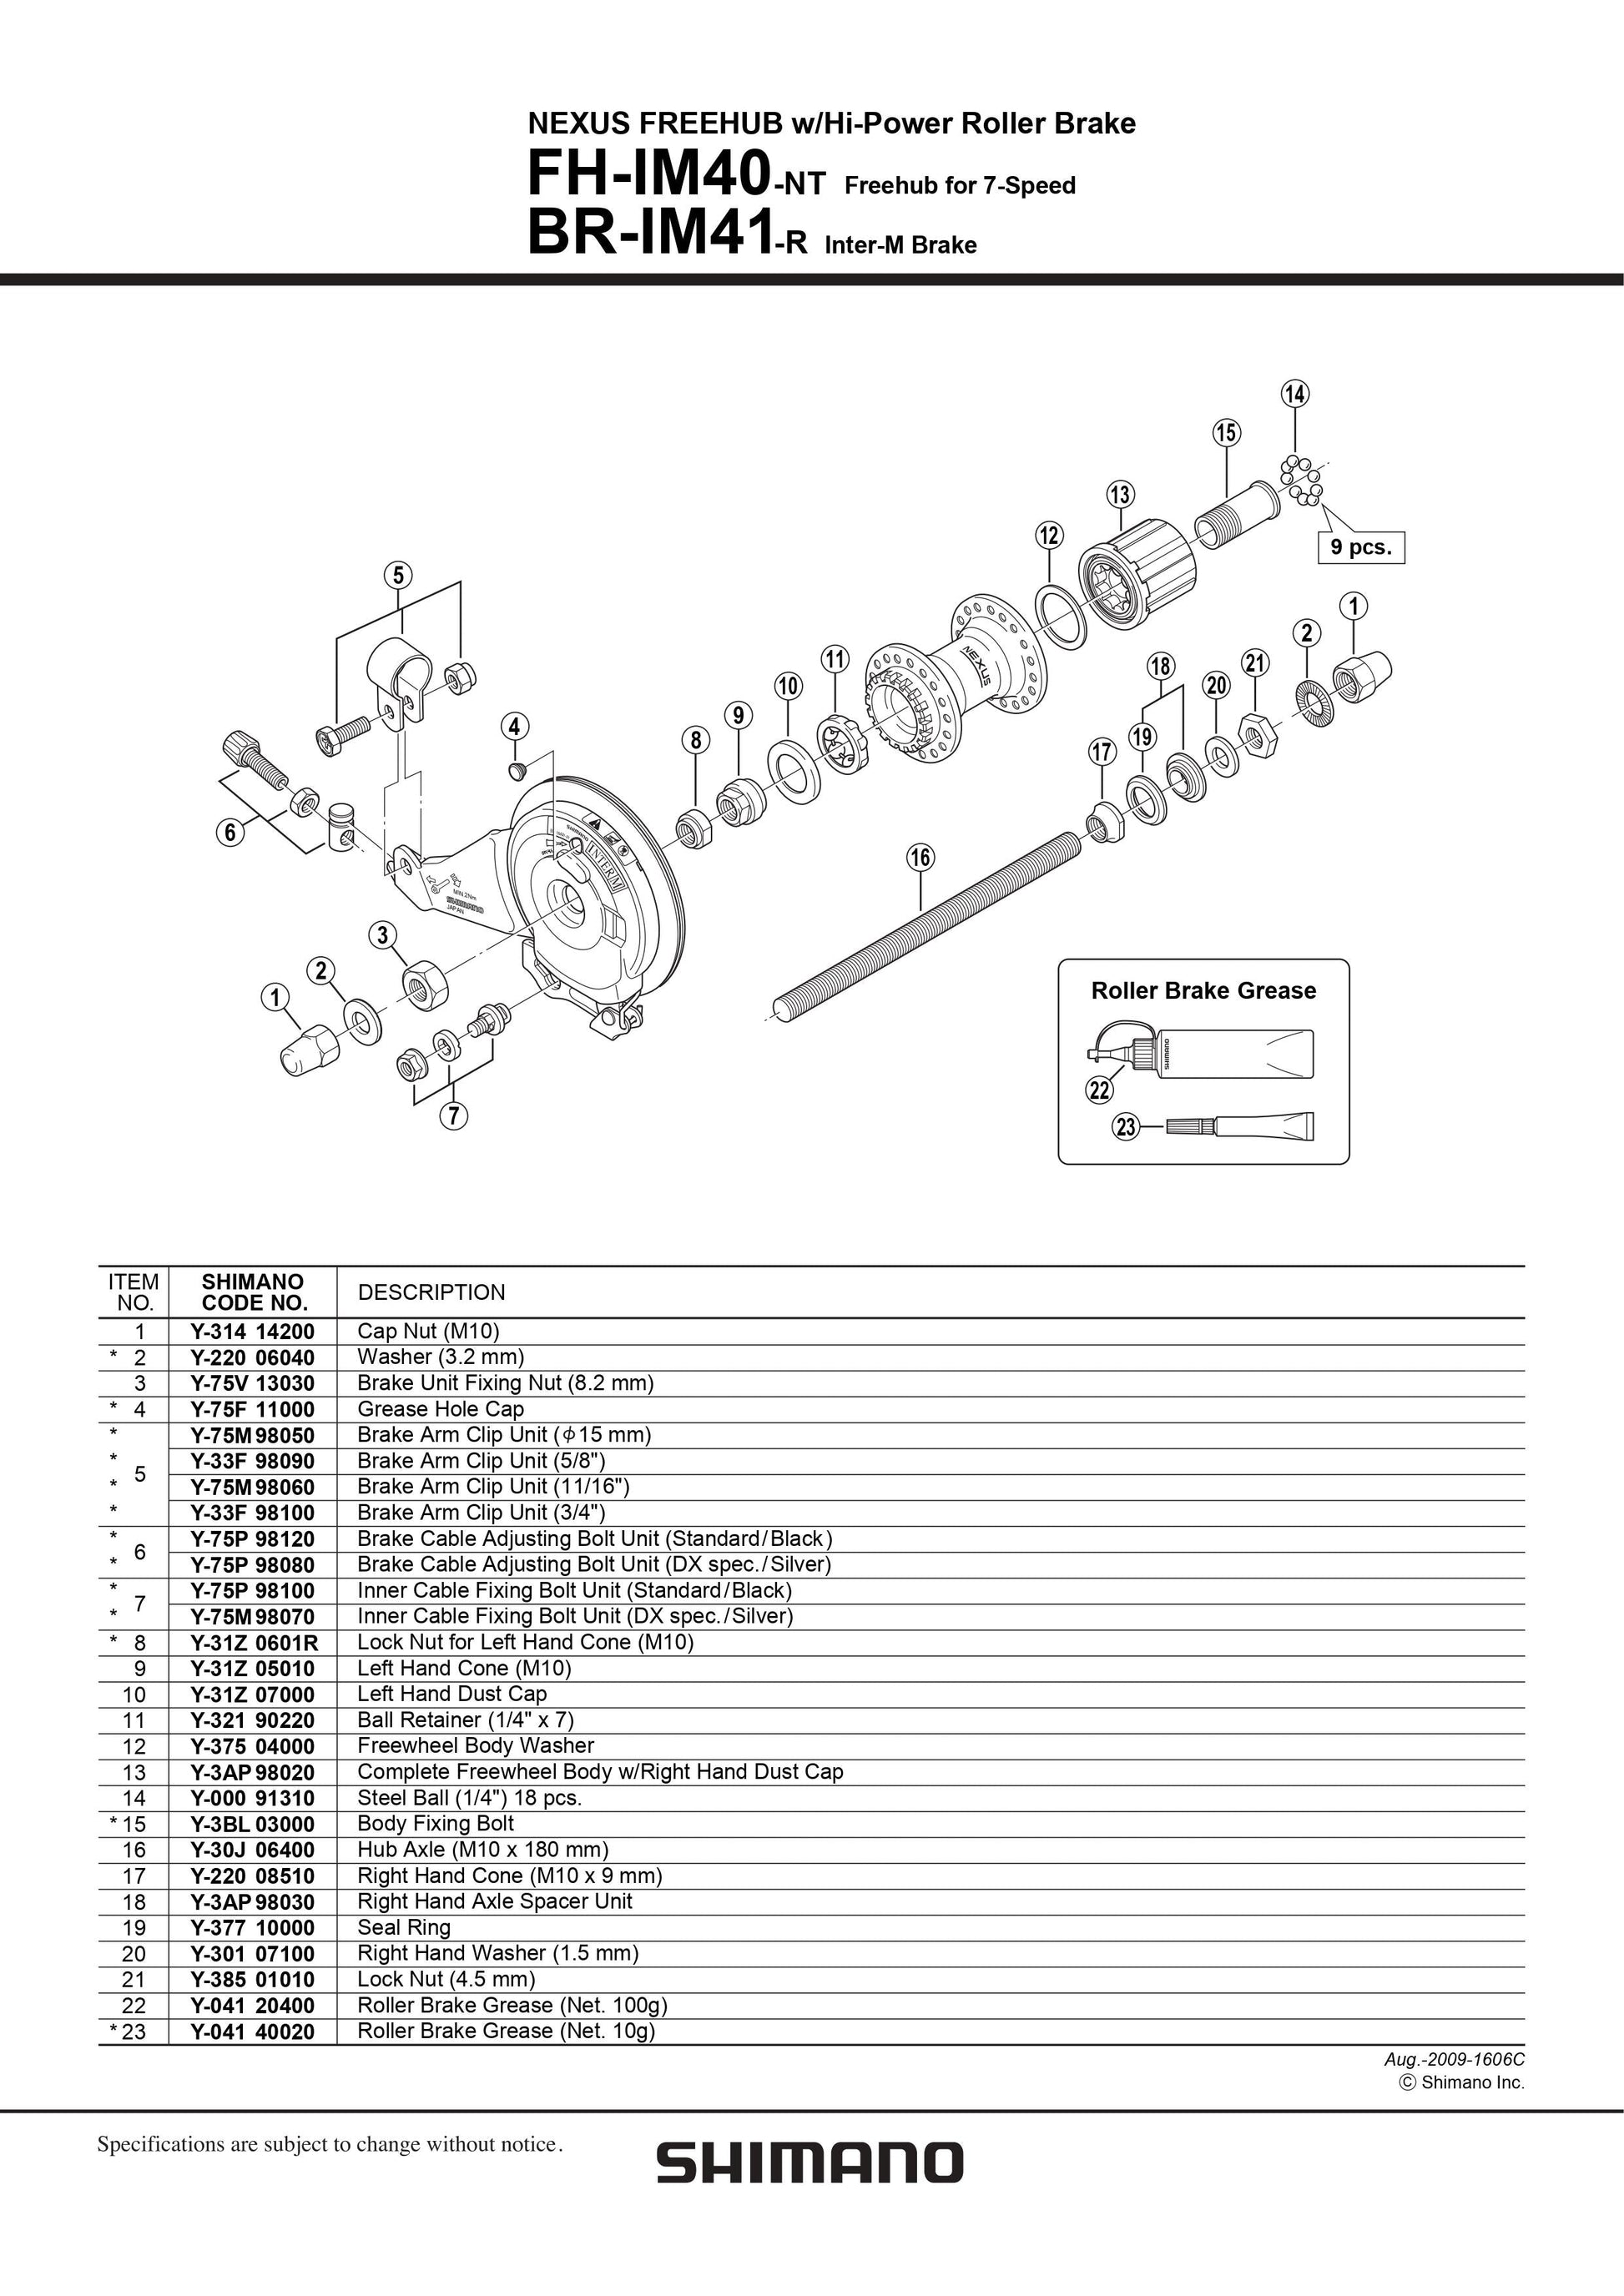 SHIMANO Nexus BR-IM41 Freehub w/Hi-Power Roller Brake Cable Adjusting Bolt Unit Standard/Black 4-Piston - Y75P98120-Pit Crew Cycles